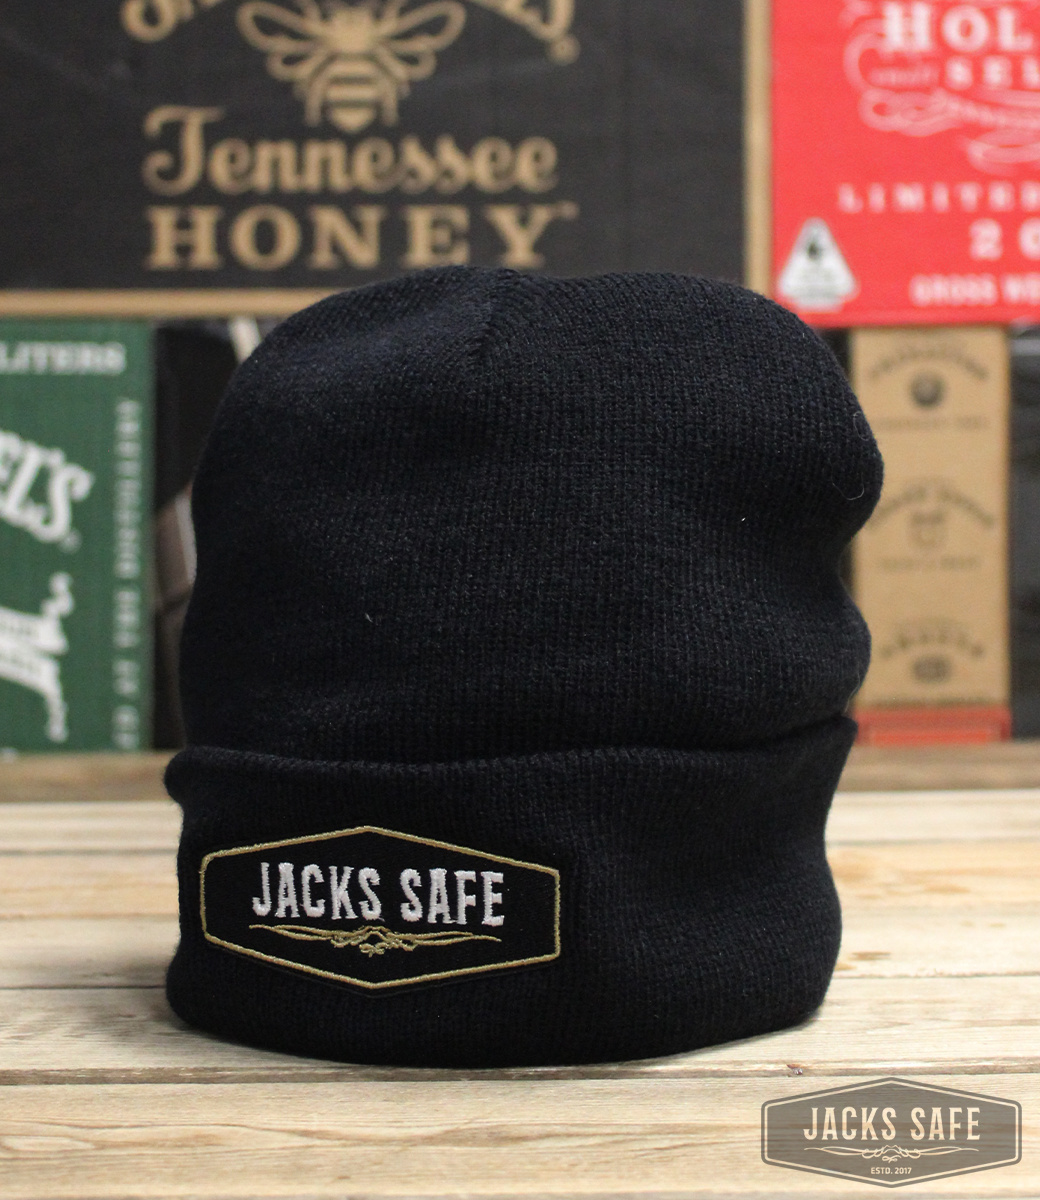 JACK'S SAFE - Hats - Winterhats - Jack's Safe Winterhat